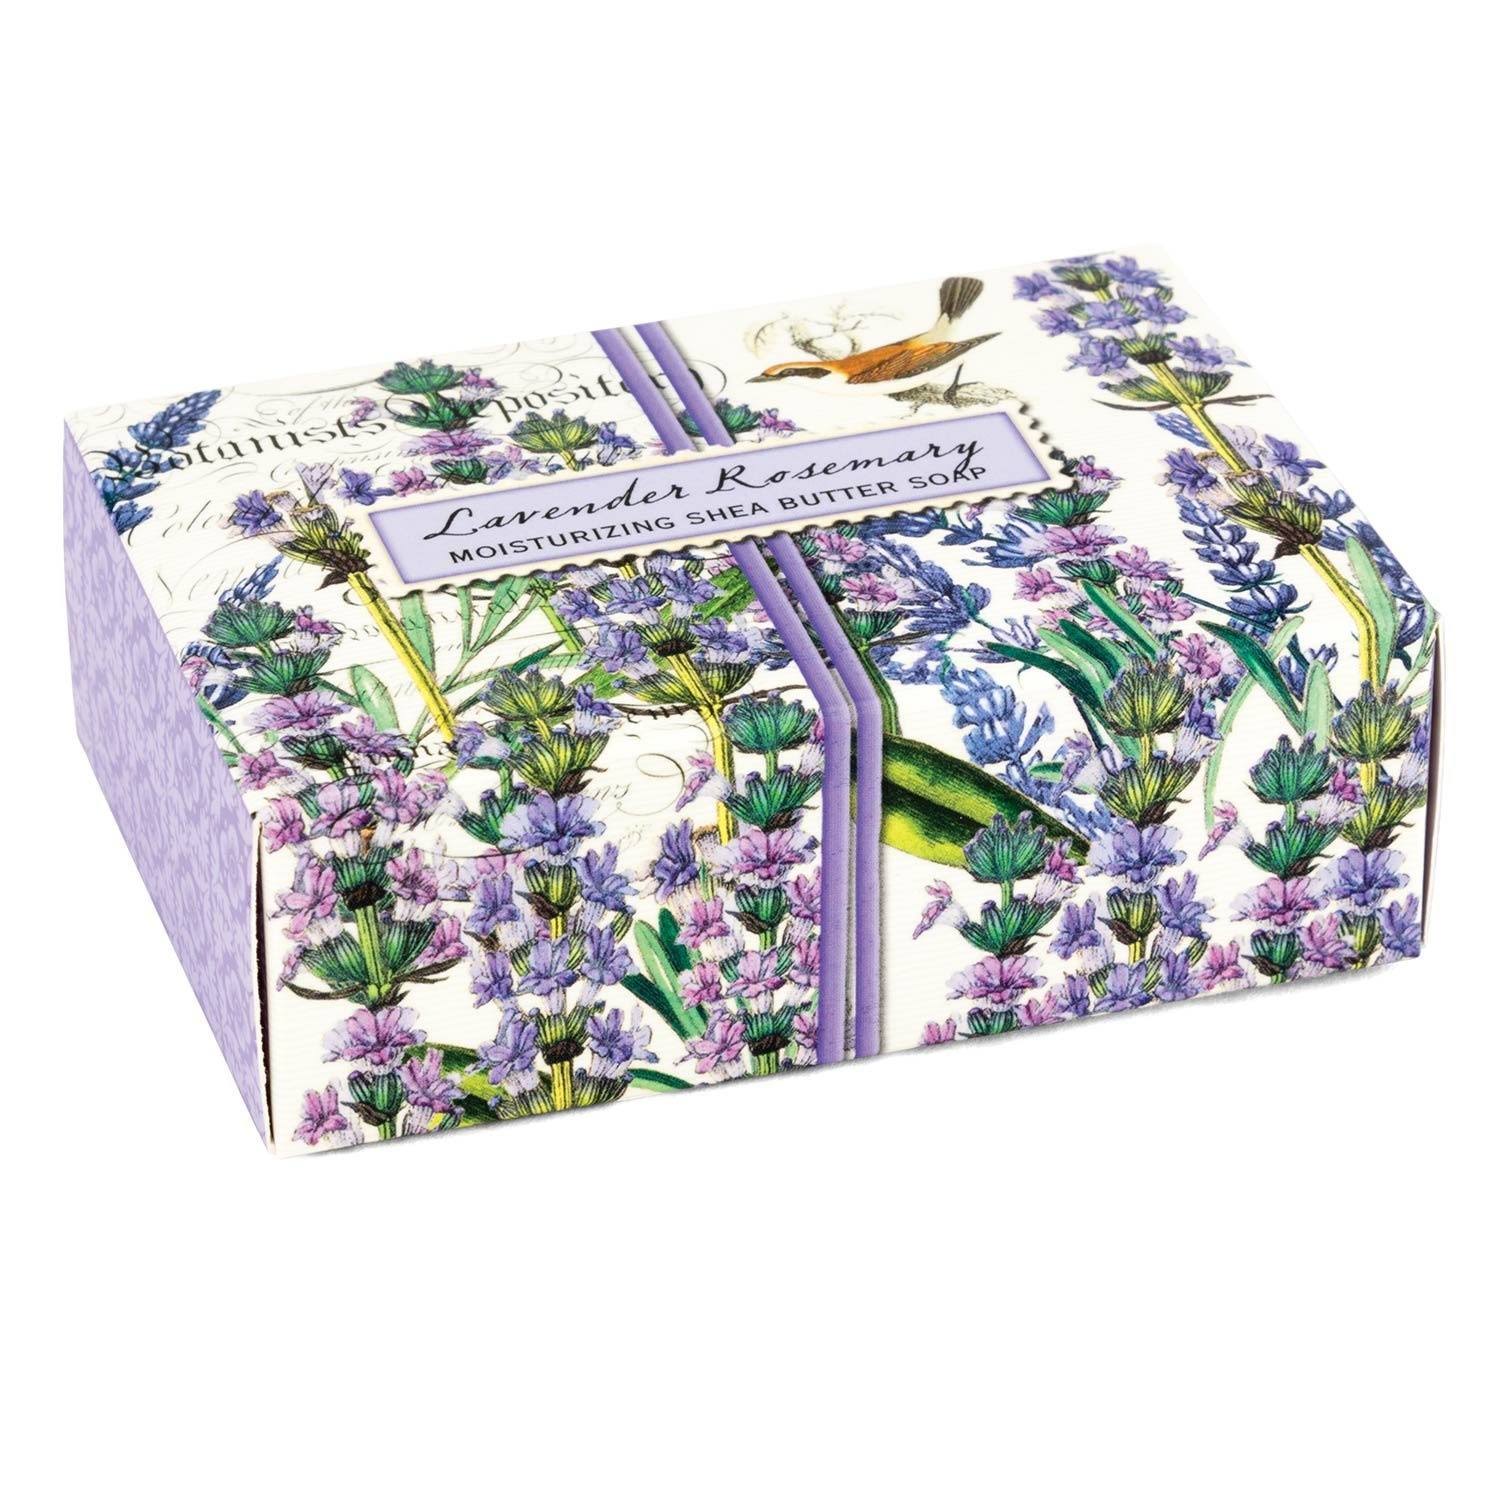 Michel Design Works : Lavender Rosemary Boxed Single Soap